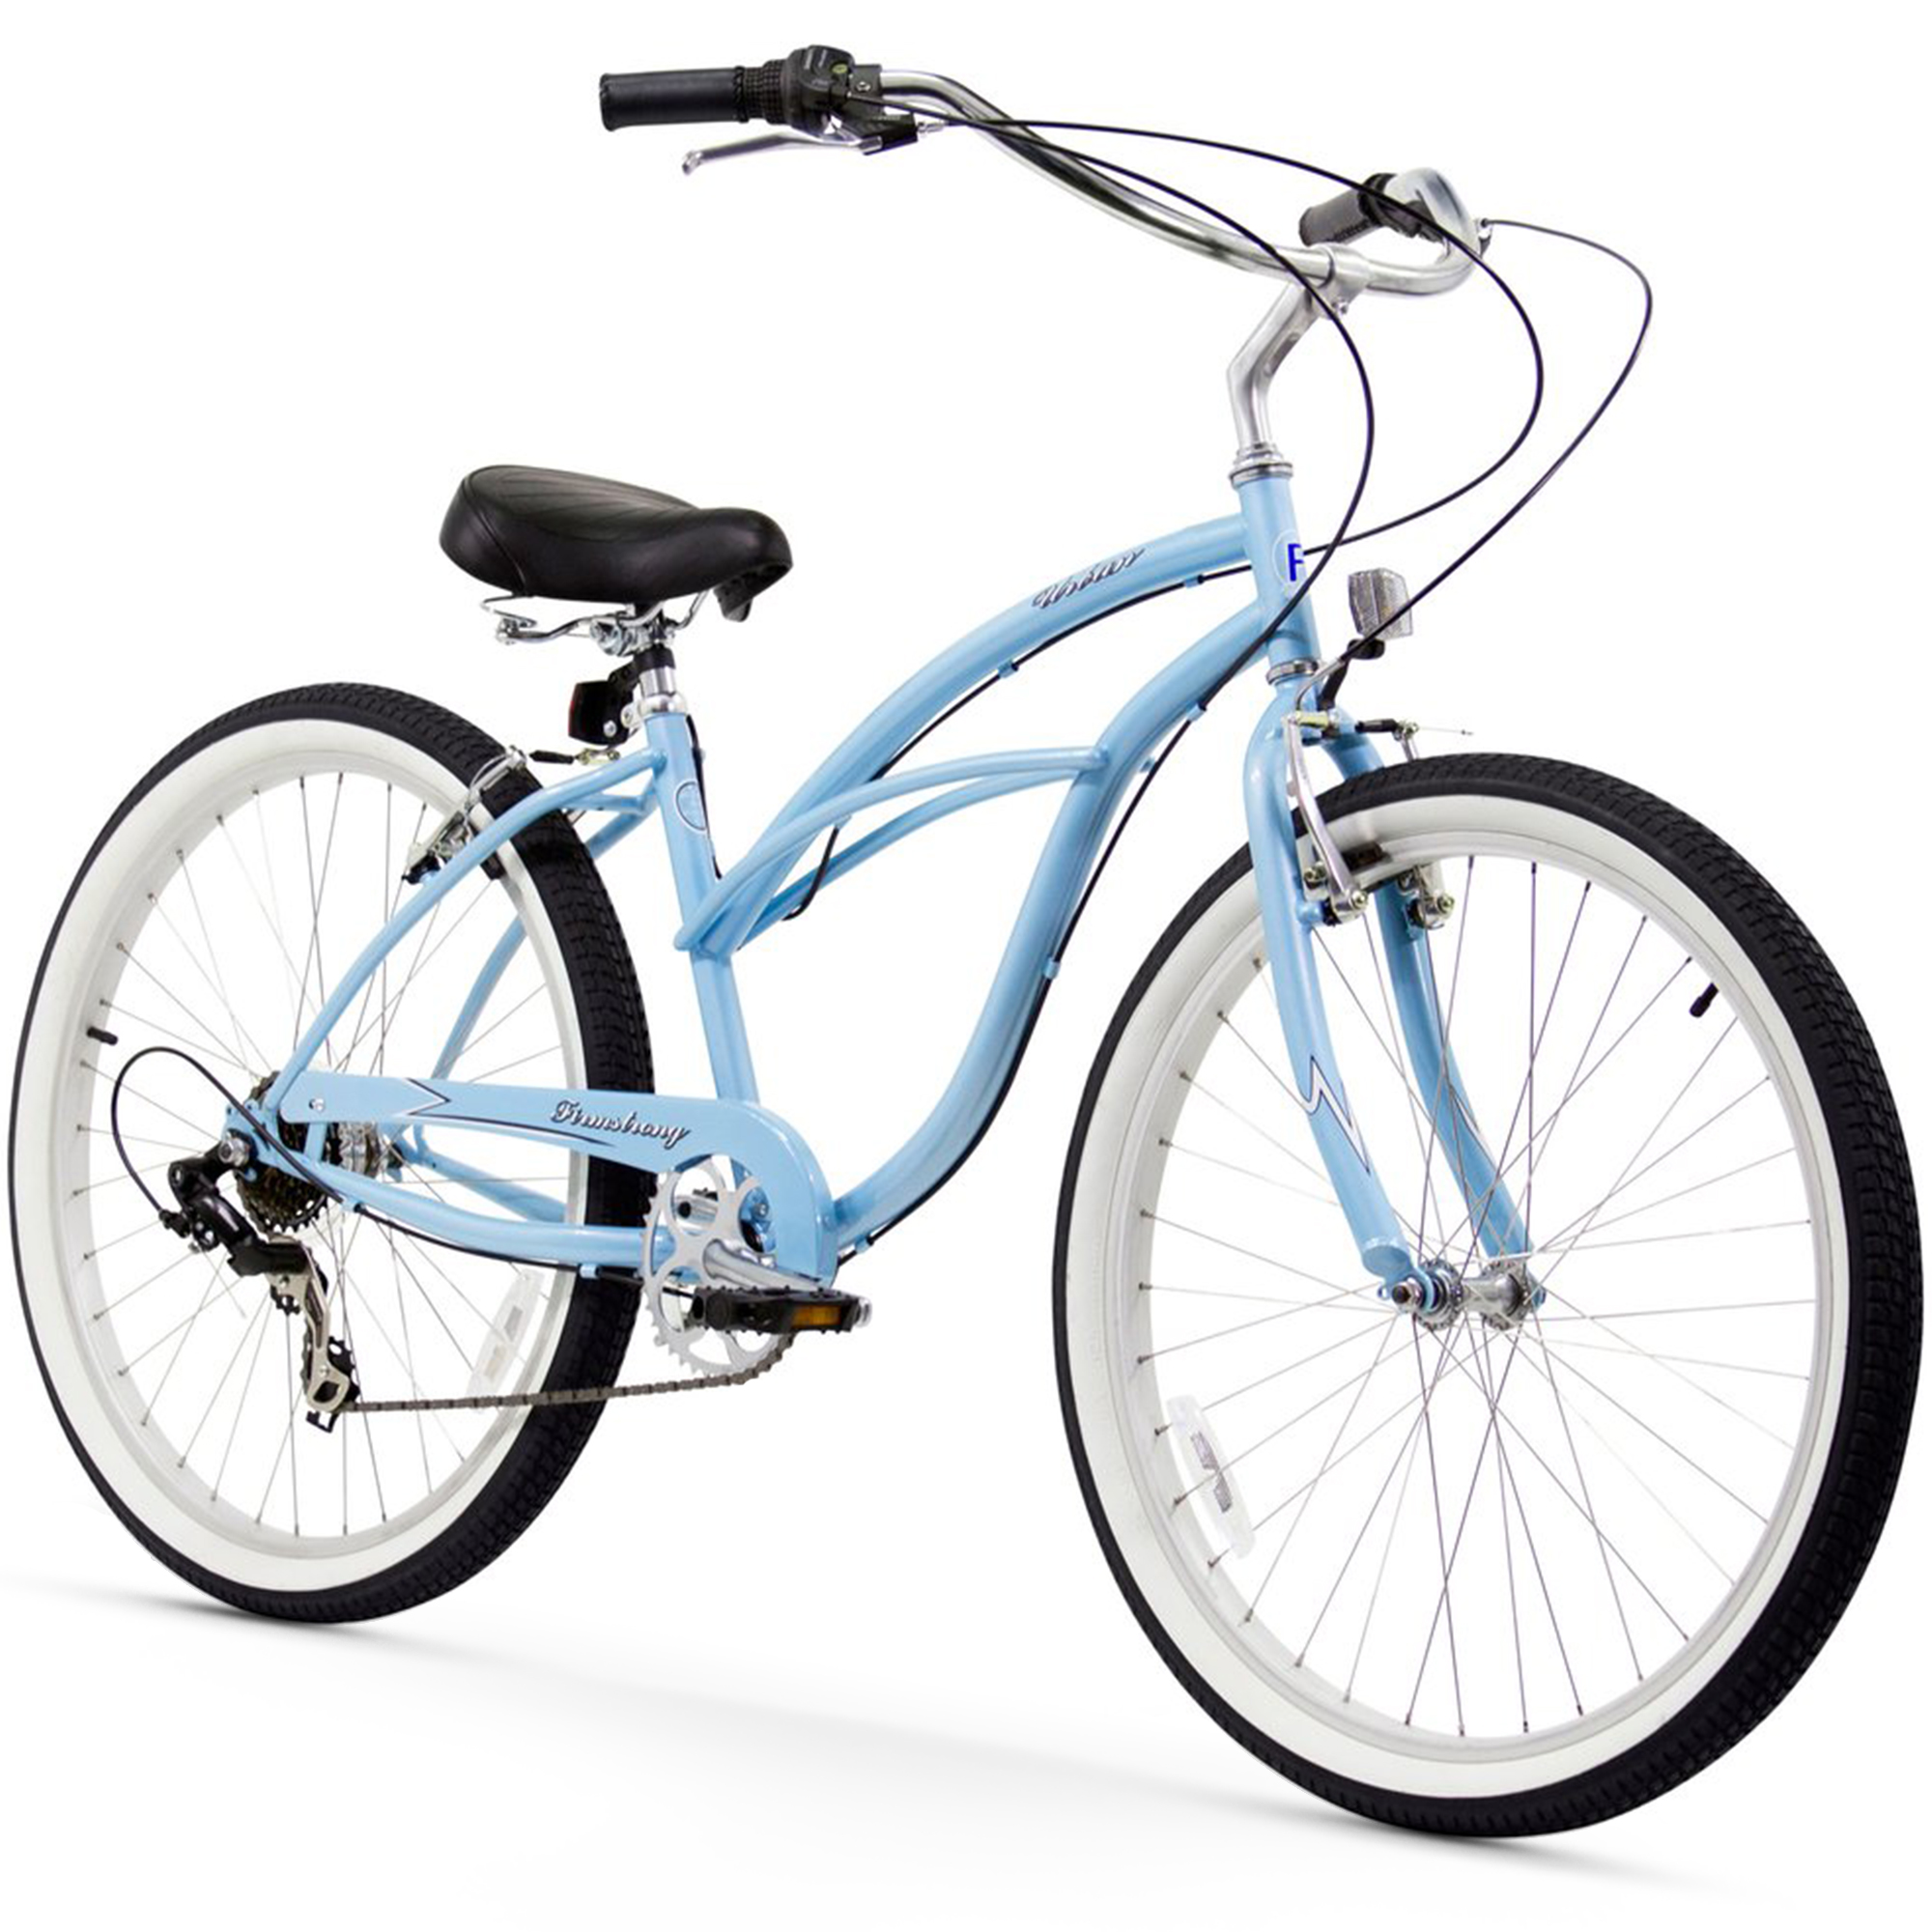 26" Firmstrong Urban Lady Seven Speed Women's Beach Cruiser Bike, Baby Blue - image 1 of 6